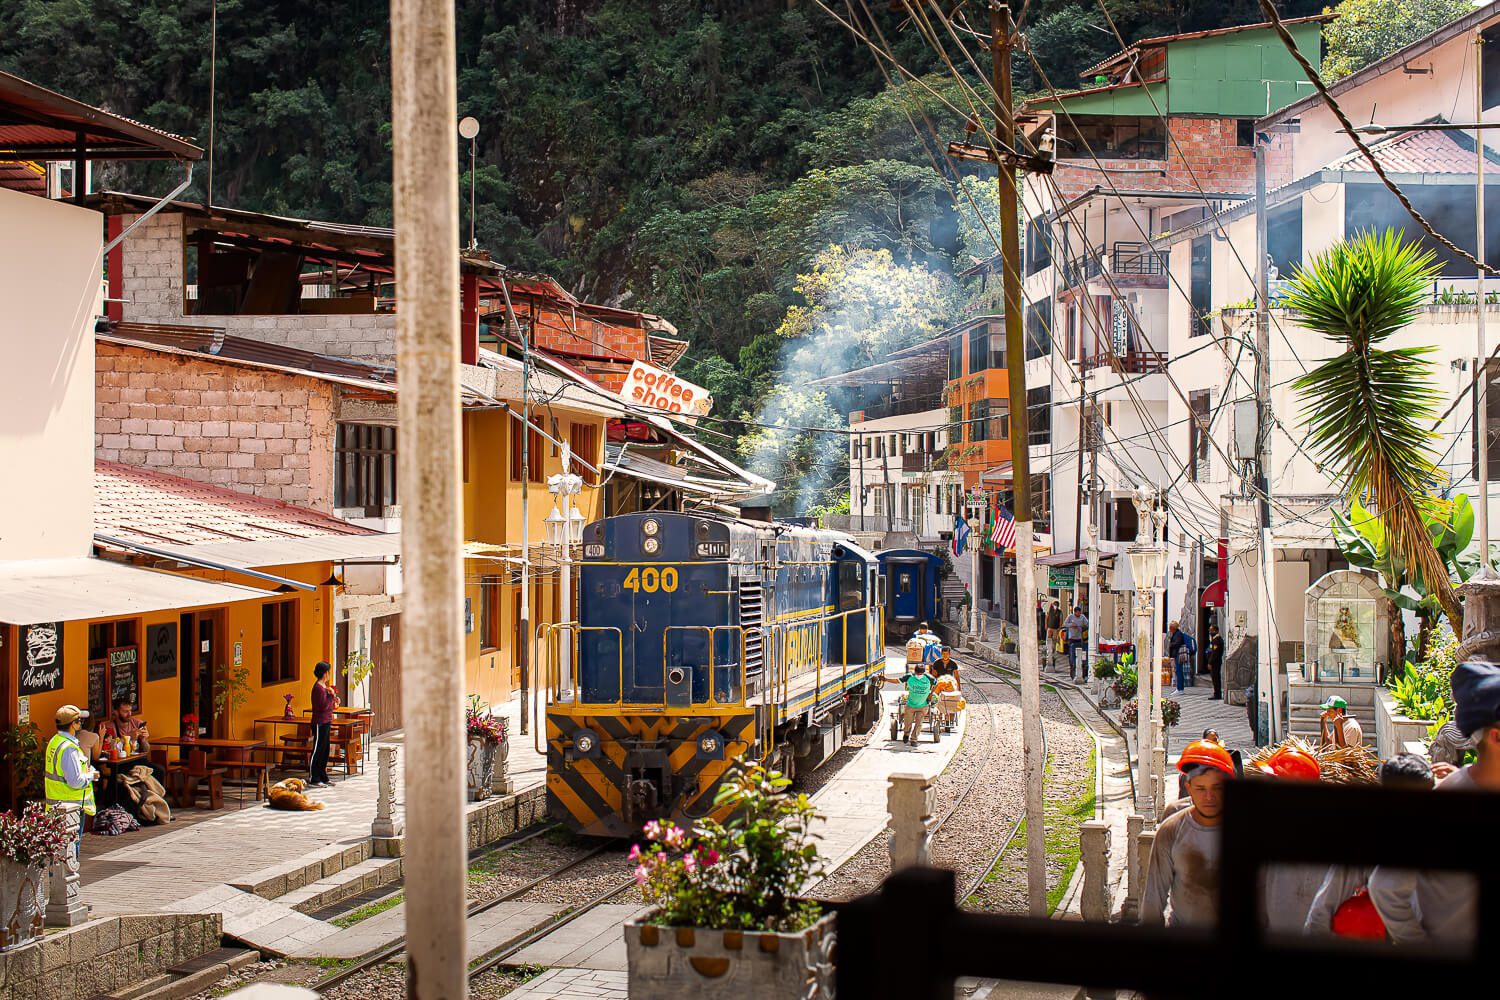 Train through Aguas Calientes, Peru